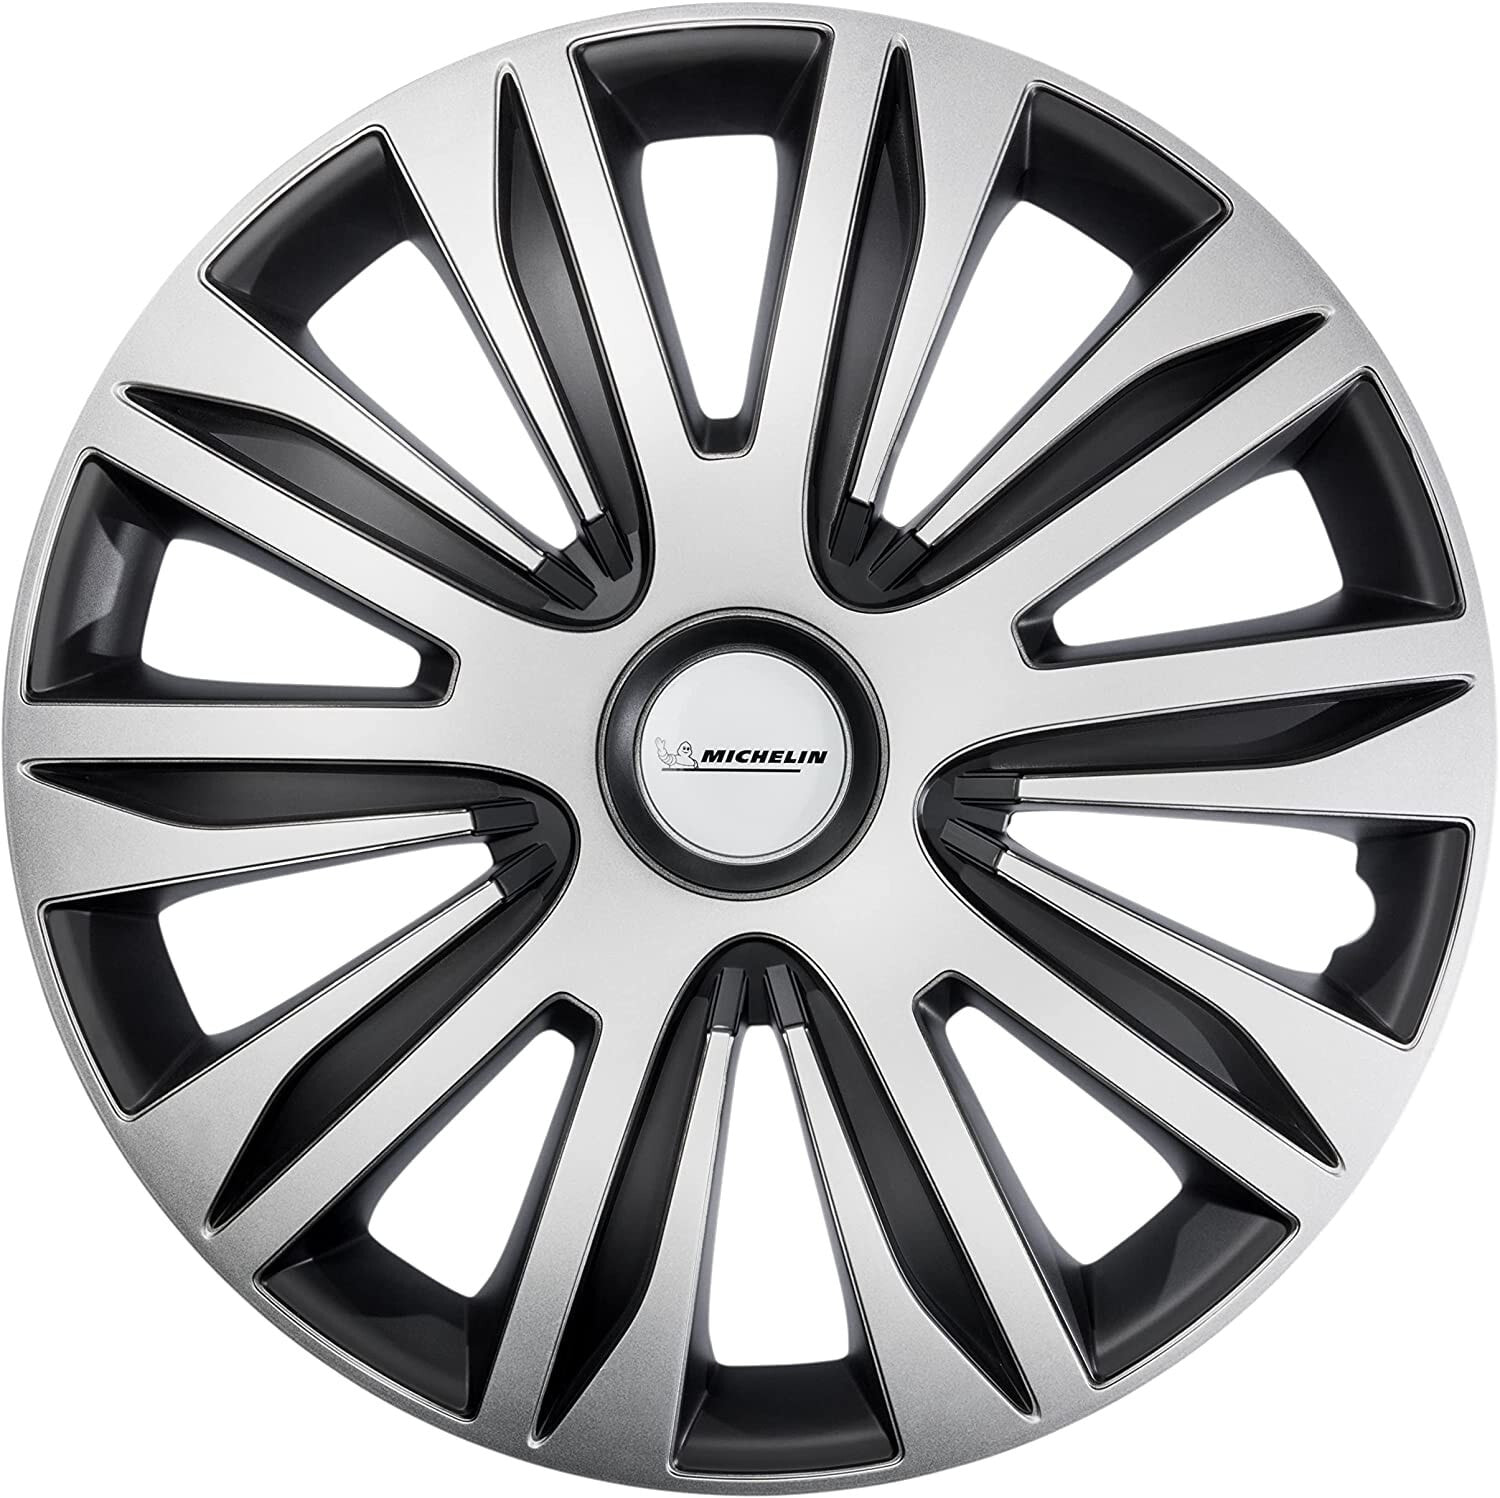 Автомобильная шина или диск Michelin Alice Hub Caps 40.6 cm / 16 Inch Universal Wheel Trim Set of 4 for Cars ABS Plastic Black / Silver, Silver / Black